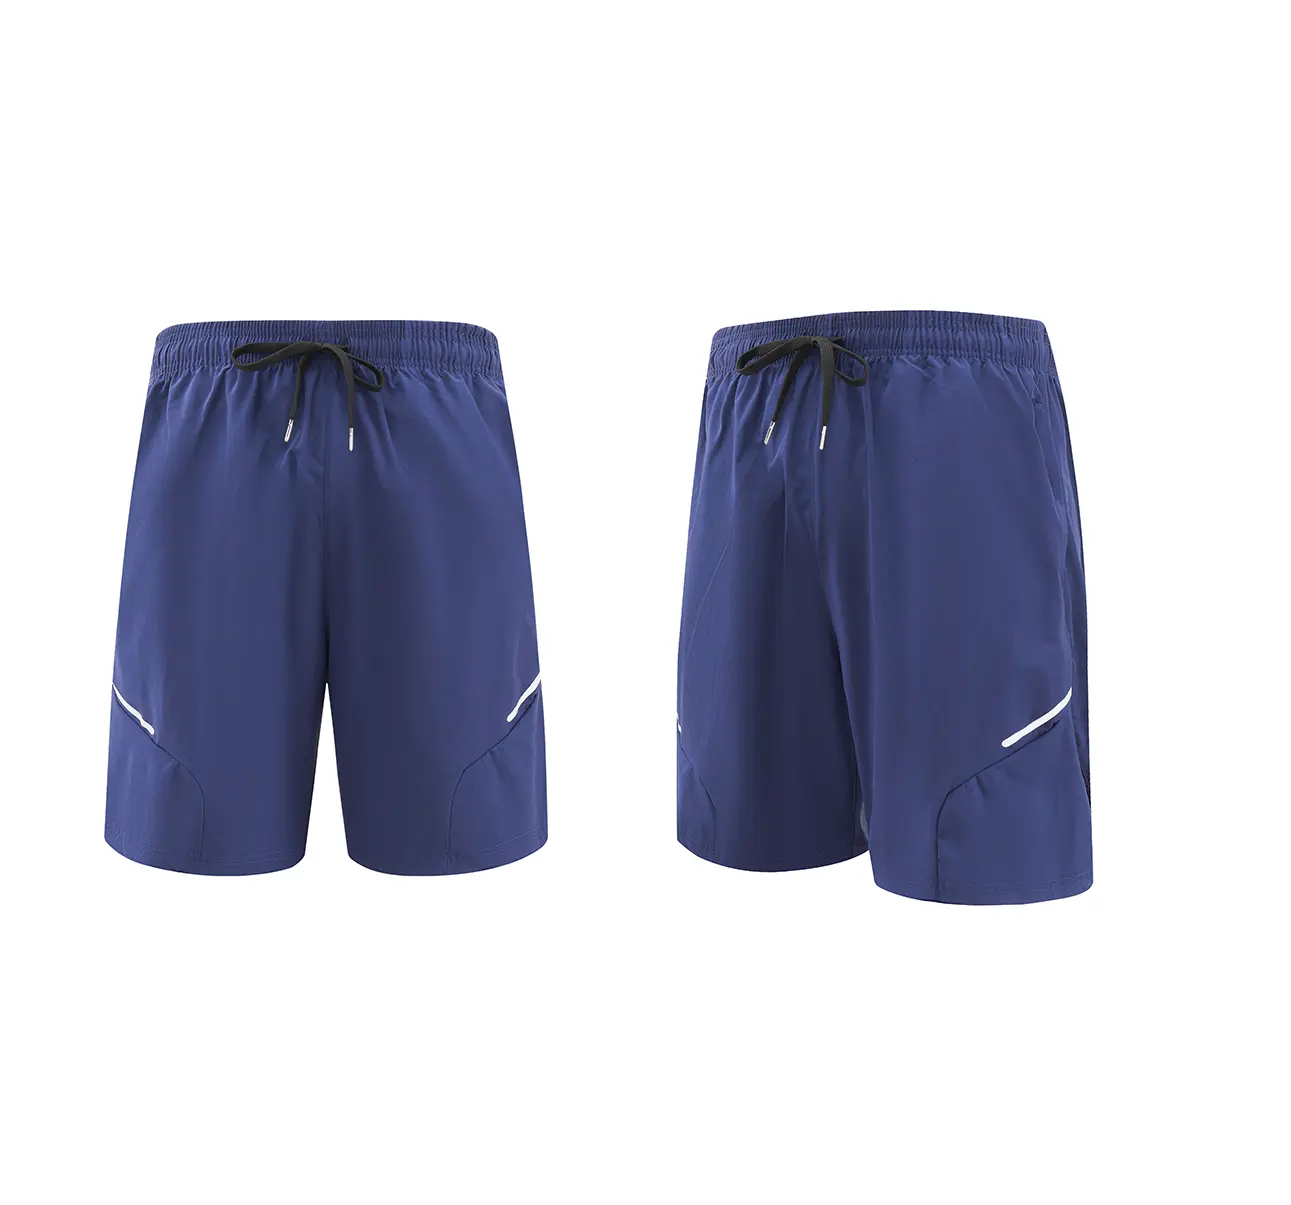 Wholesale Custom Casual 5 inch Single Layer Gym Pants Workout Sports Shorts Sublimation Plus Size Men's Shorts